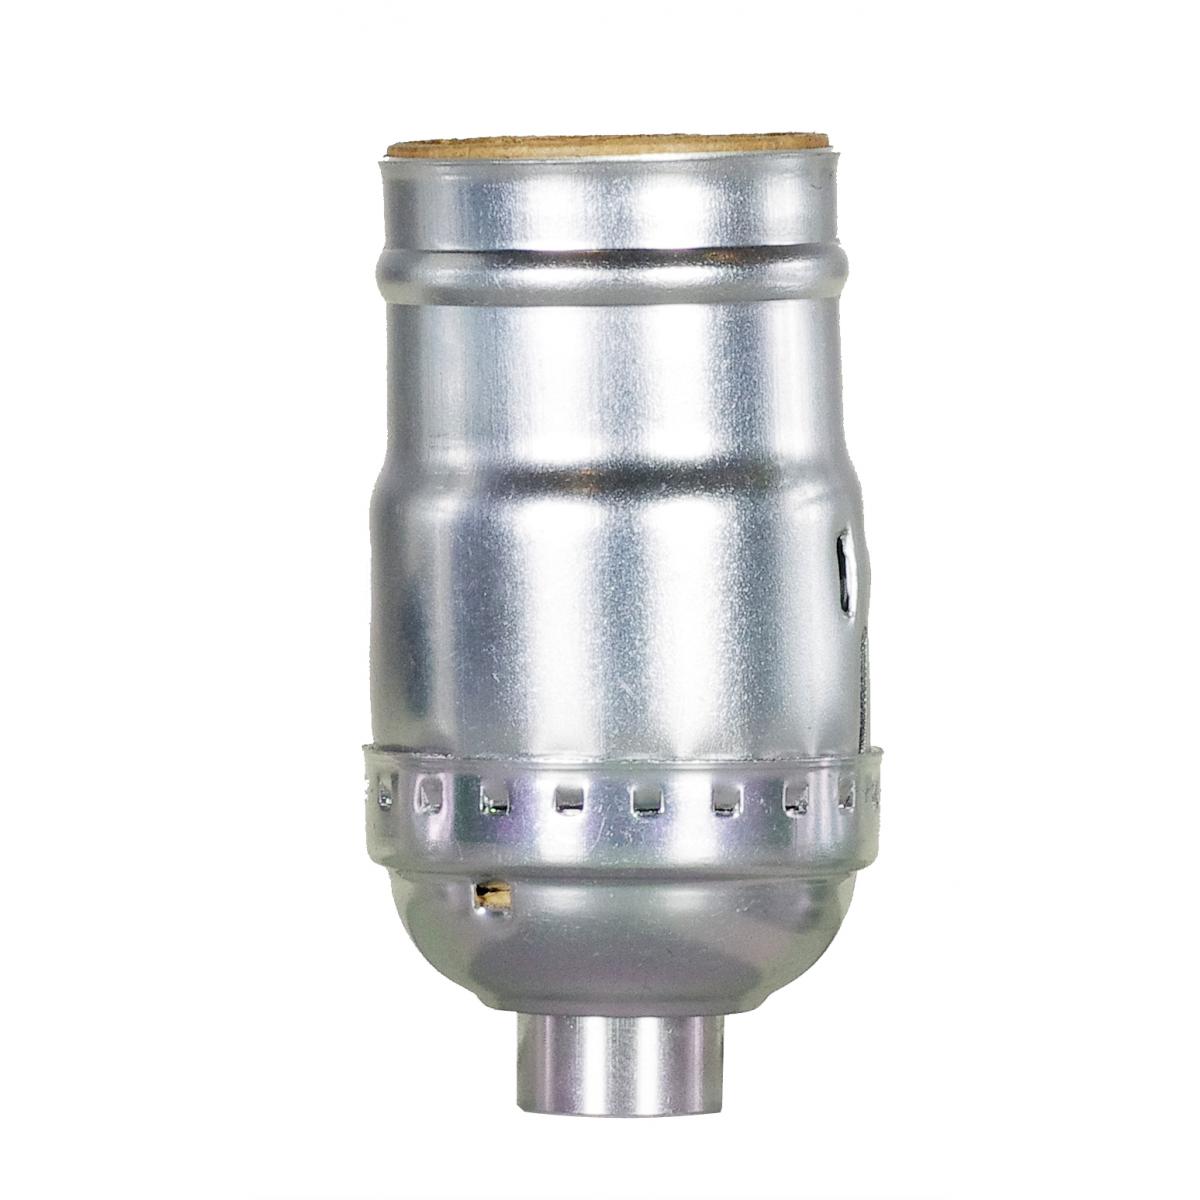 Satco 80-1563 Standard Keyless Socket 1/8 IPS Aluminum Nickel Finish 660W 250V Push-In Terminal With Strain Relief Hooks